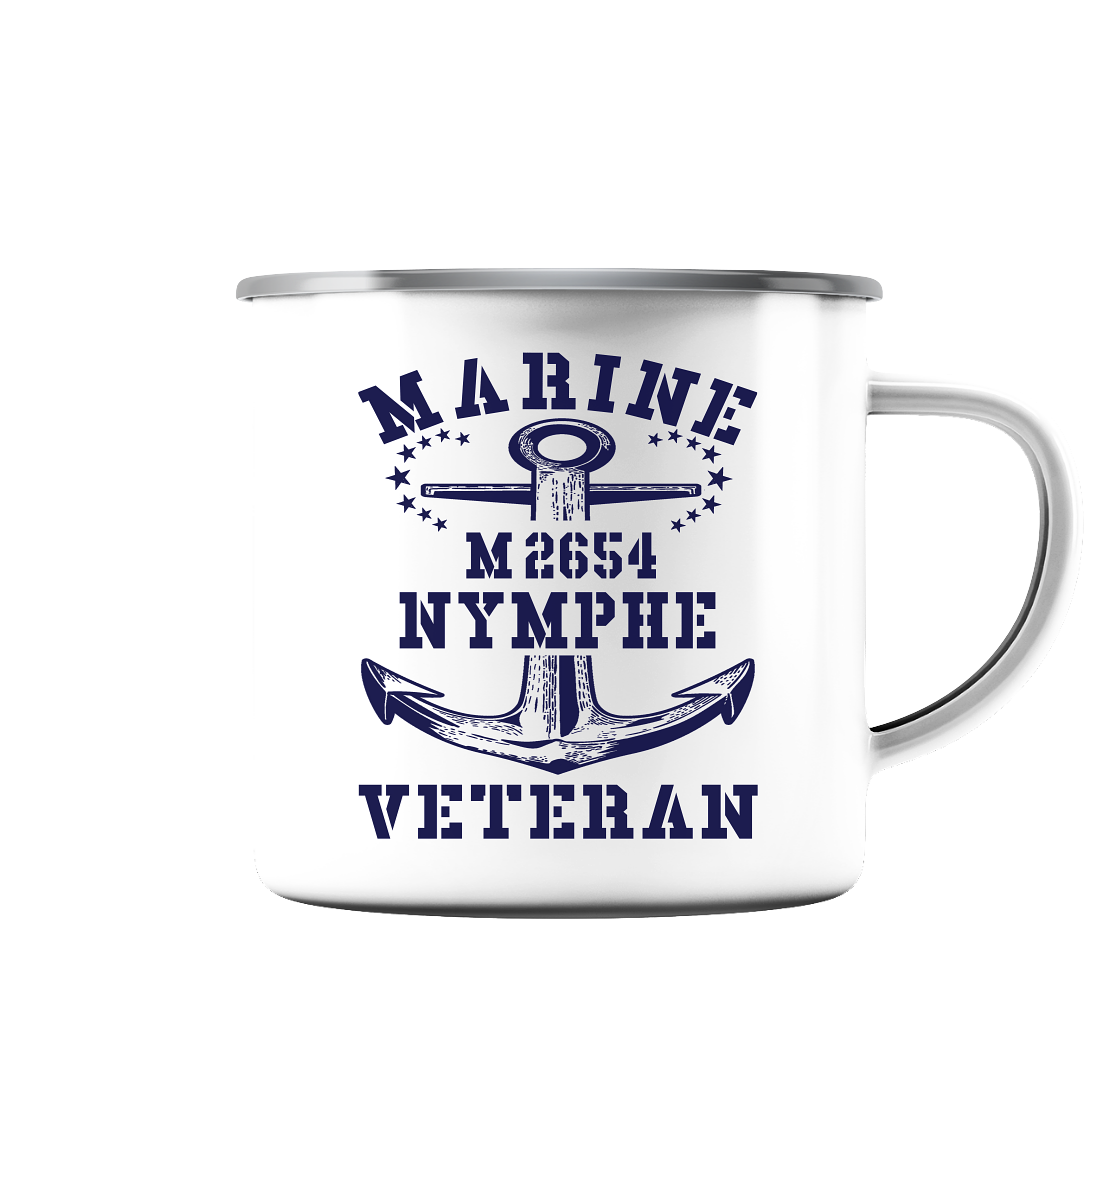 BiMi M2654 NYMPHE Marine Veteran - Emaille Tasse (Silber)